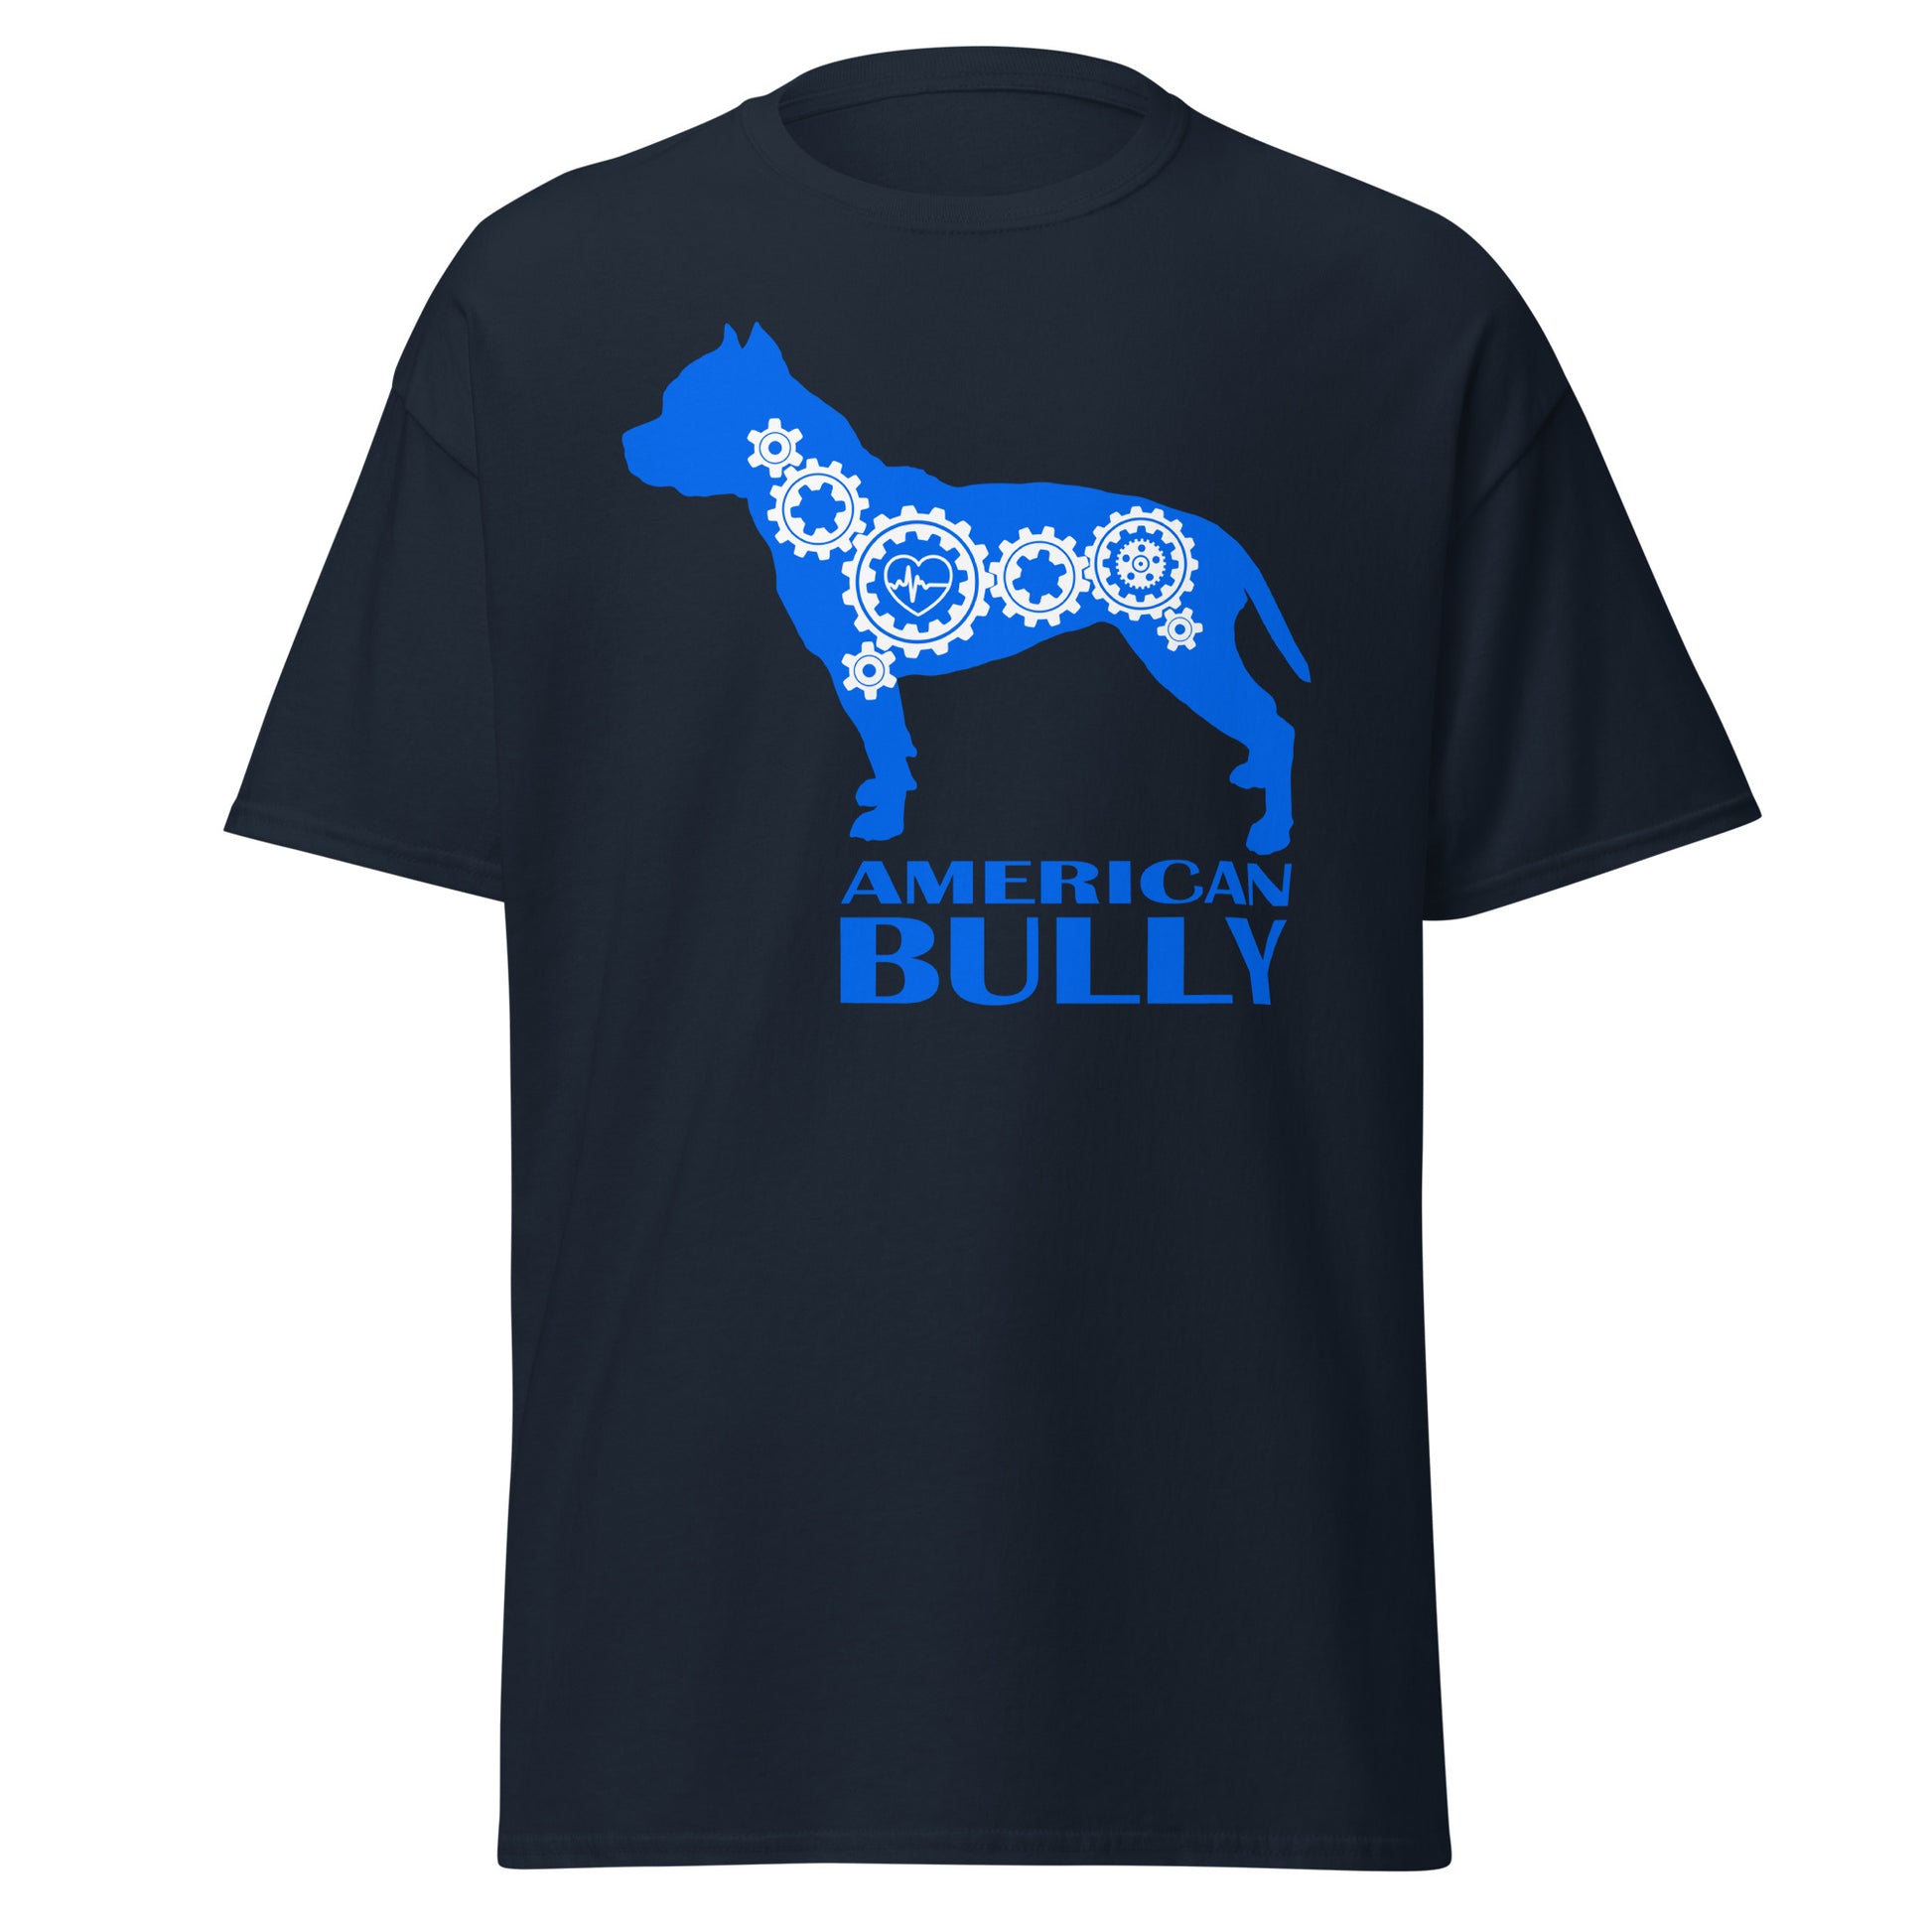 American Bully Bionic men’s navy t-shirt by Dog Artistry.